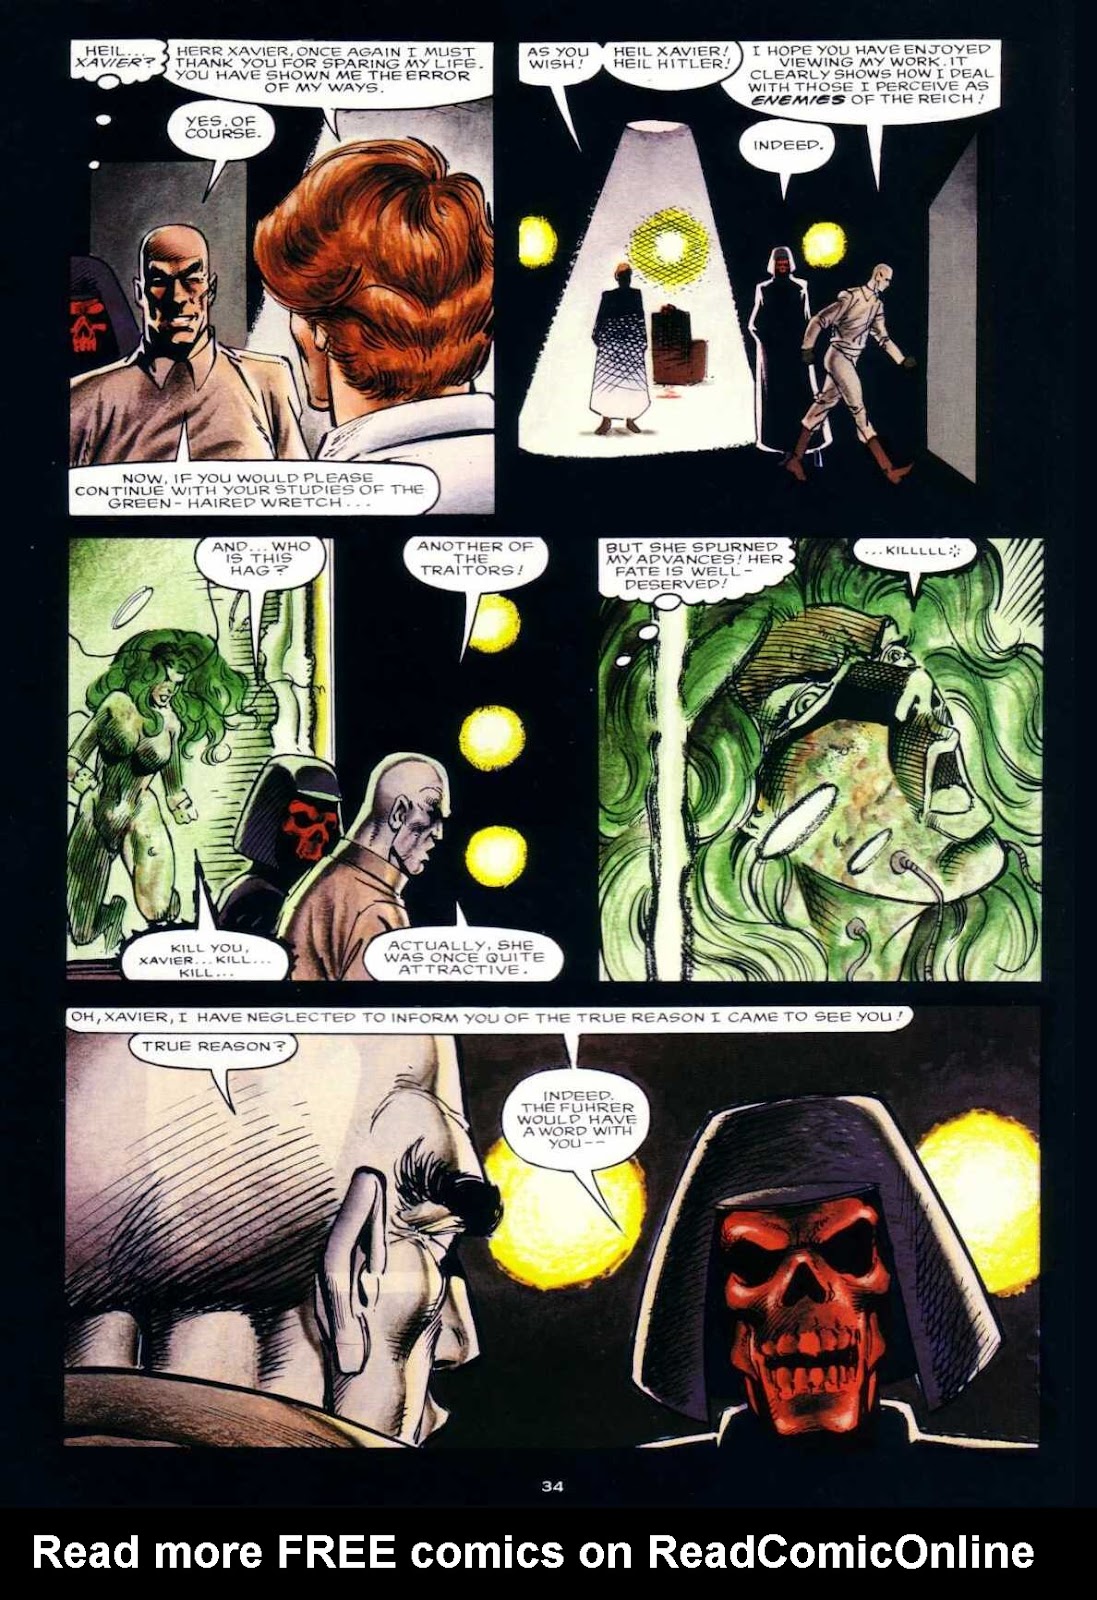 Marvel Graphic Novel issue 66 - Excalibur - Weird War III - Page 33